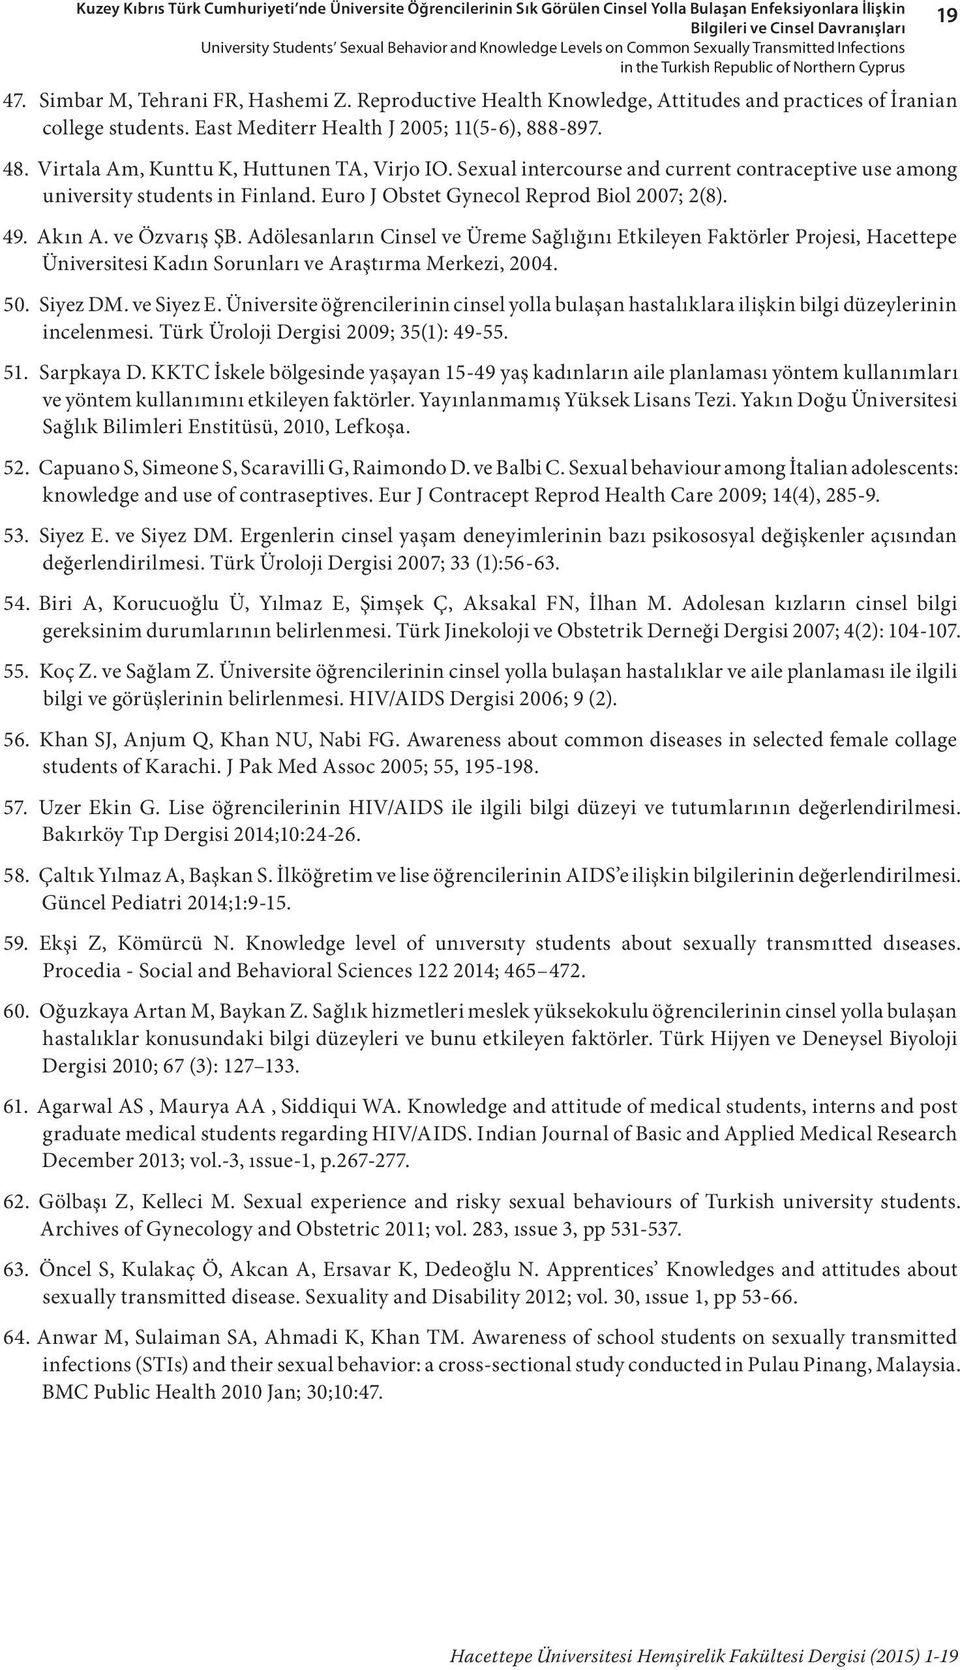 Reproductive Health Knowledge, Attitudes and practices of İranian college students. East Mediterr Health J 2005; 11(5-6), 888-897. 48. Virtala Am, Kunttu K, Huttunen TA, Virjo IO.